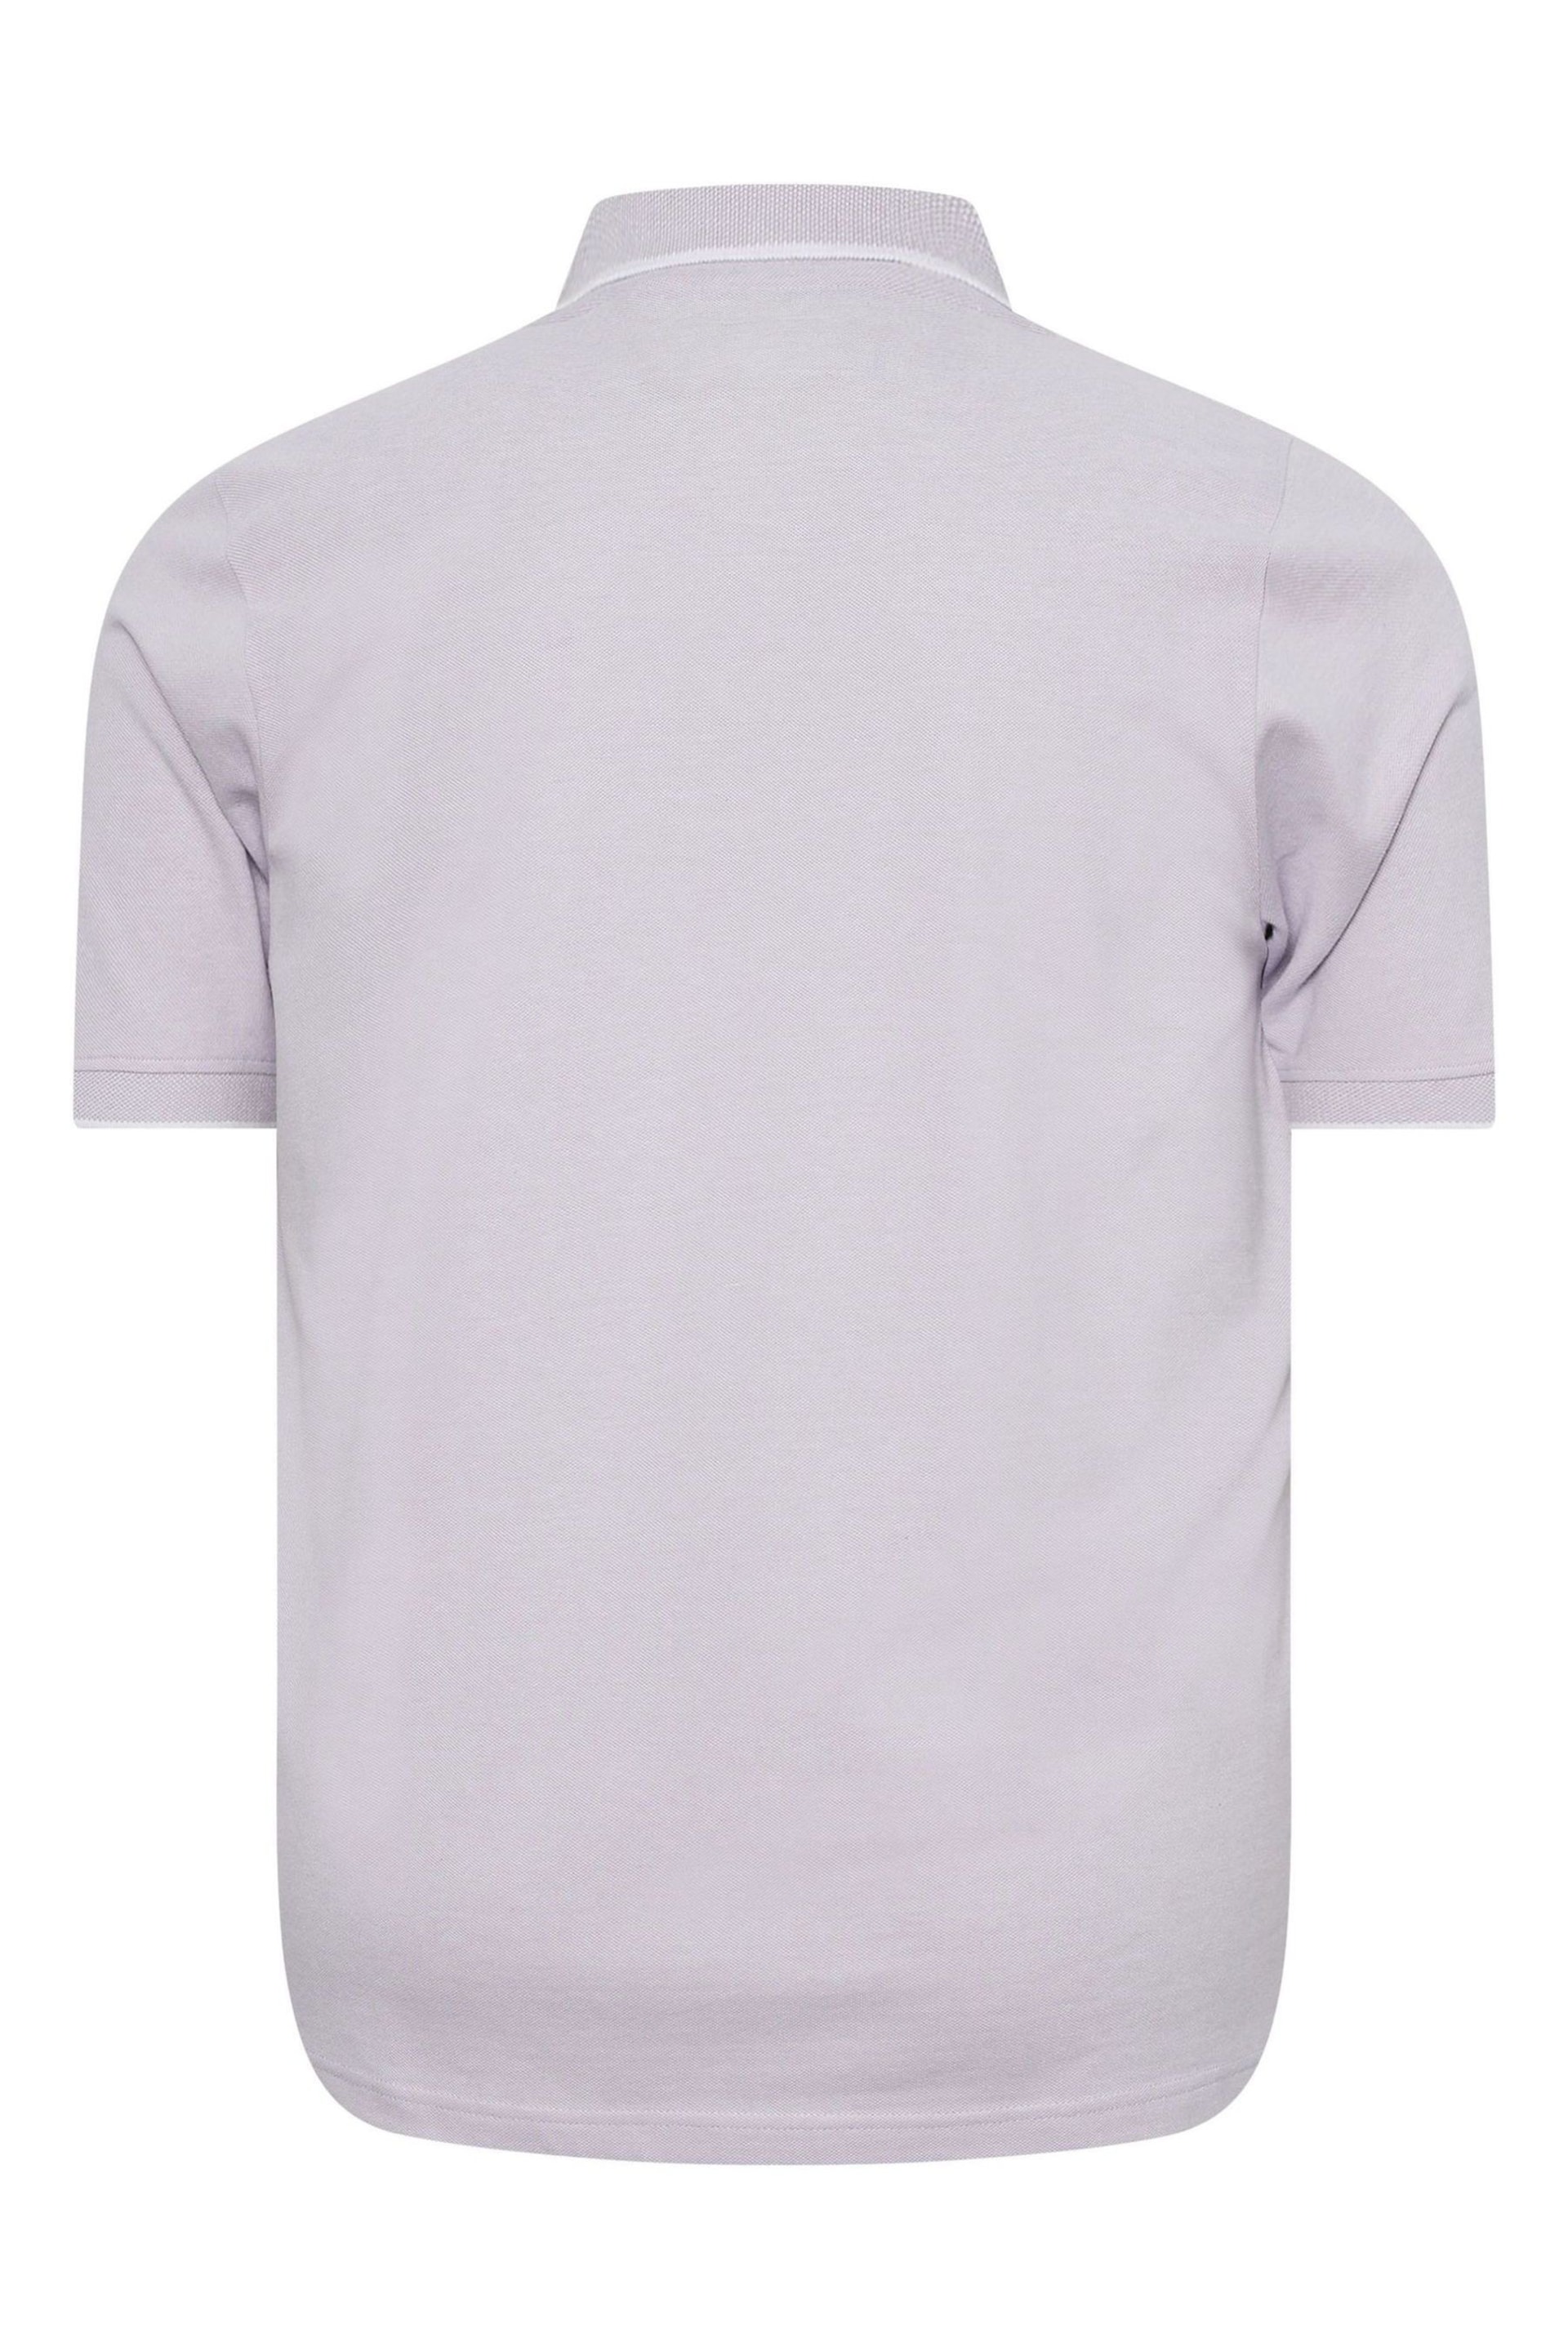 BadRhino Big & Tall Purple Birdseye Short Sleeve Polo Shirt - Image 3 of 3